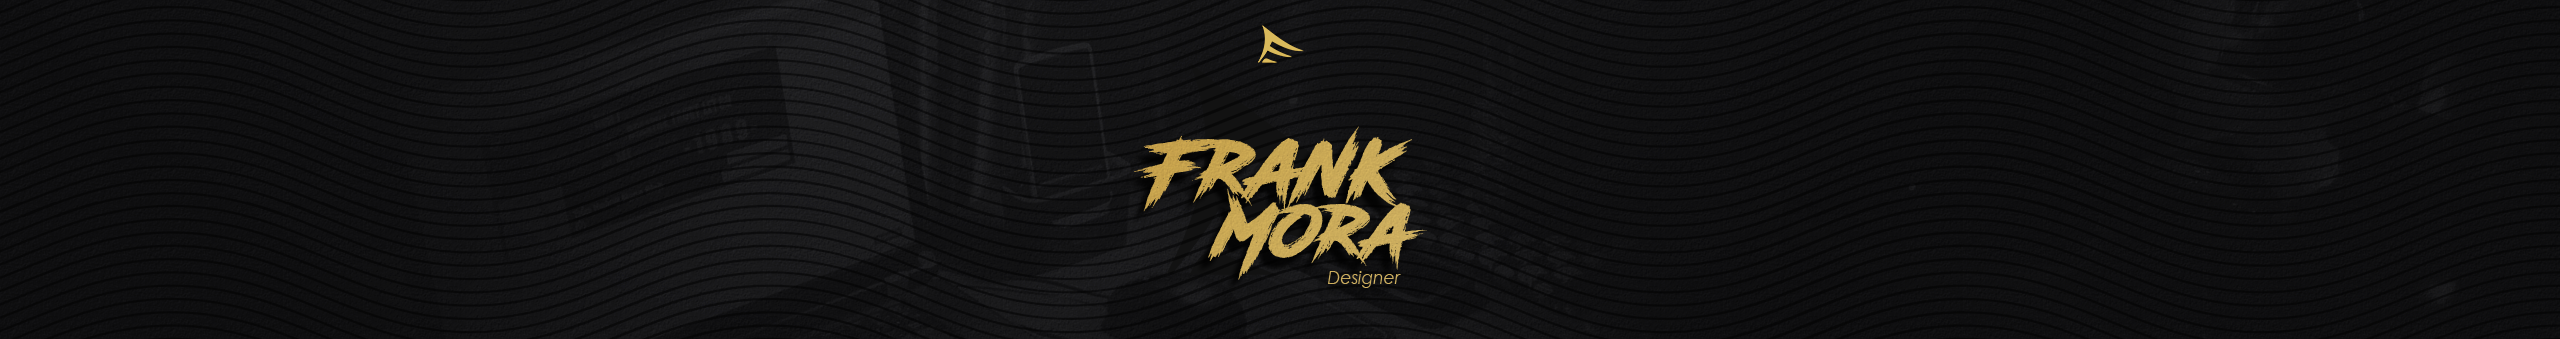 Frank Mora のプロファイルバナー